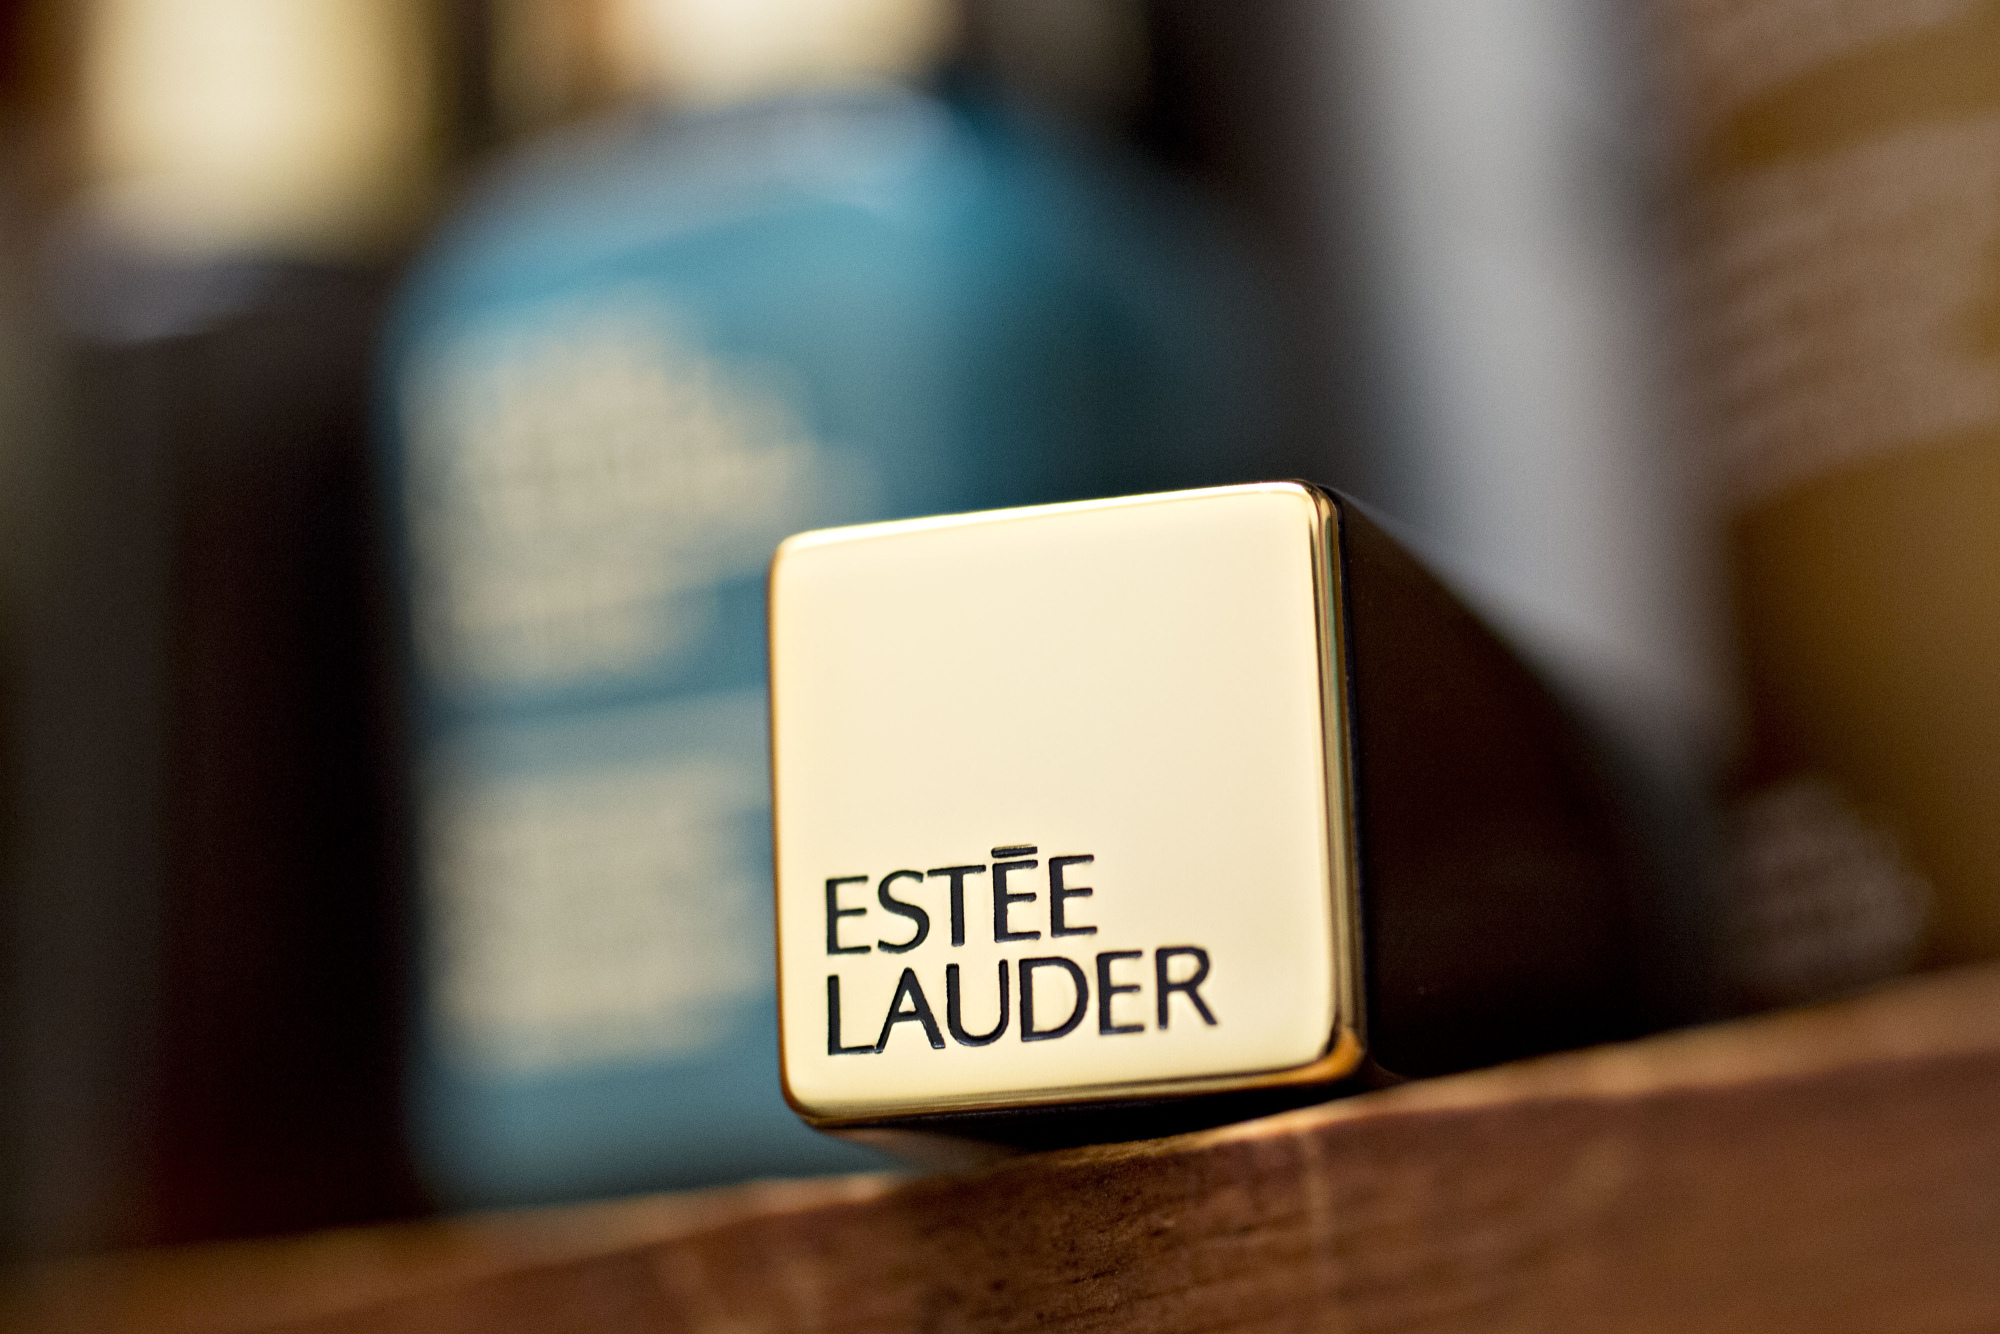 Estée Lauder is falling behind rivals like L'Oréal, even on its home